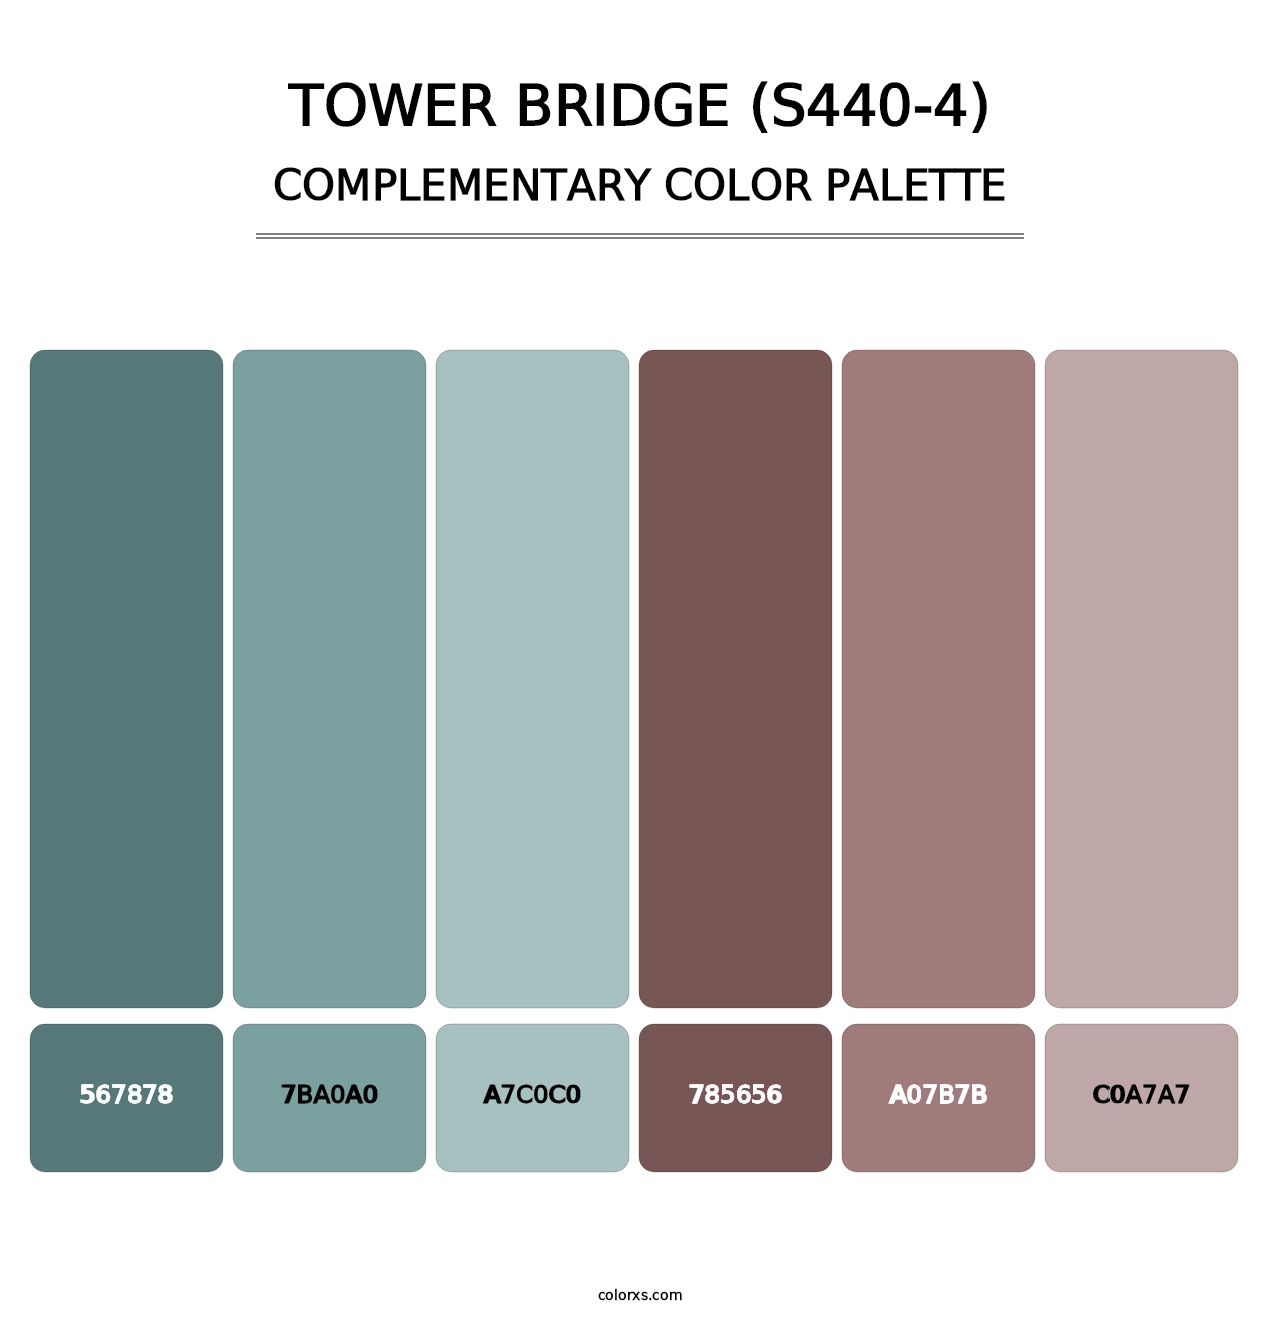 Tower Bridge (S440-4) - Complementary Color Palette